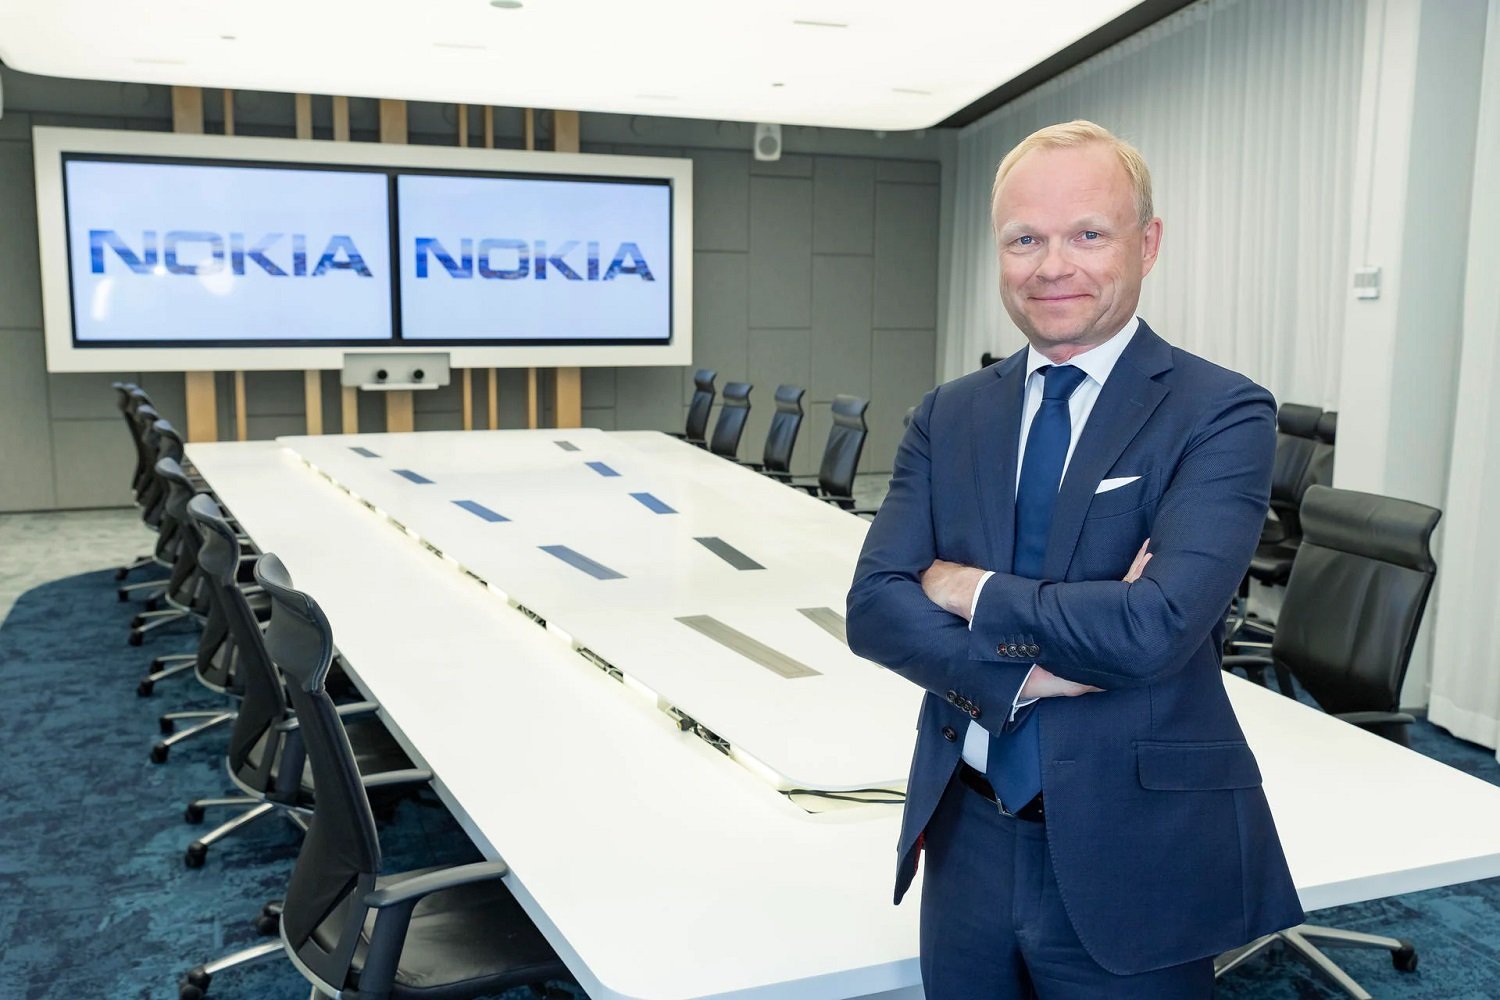 Nokia CEO Pekka Lundmark